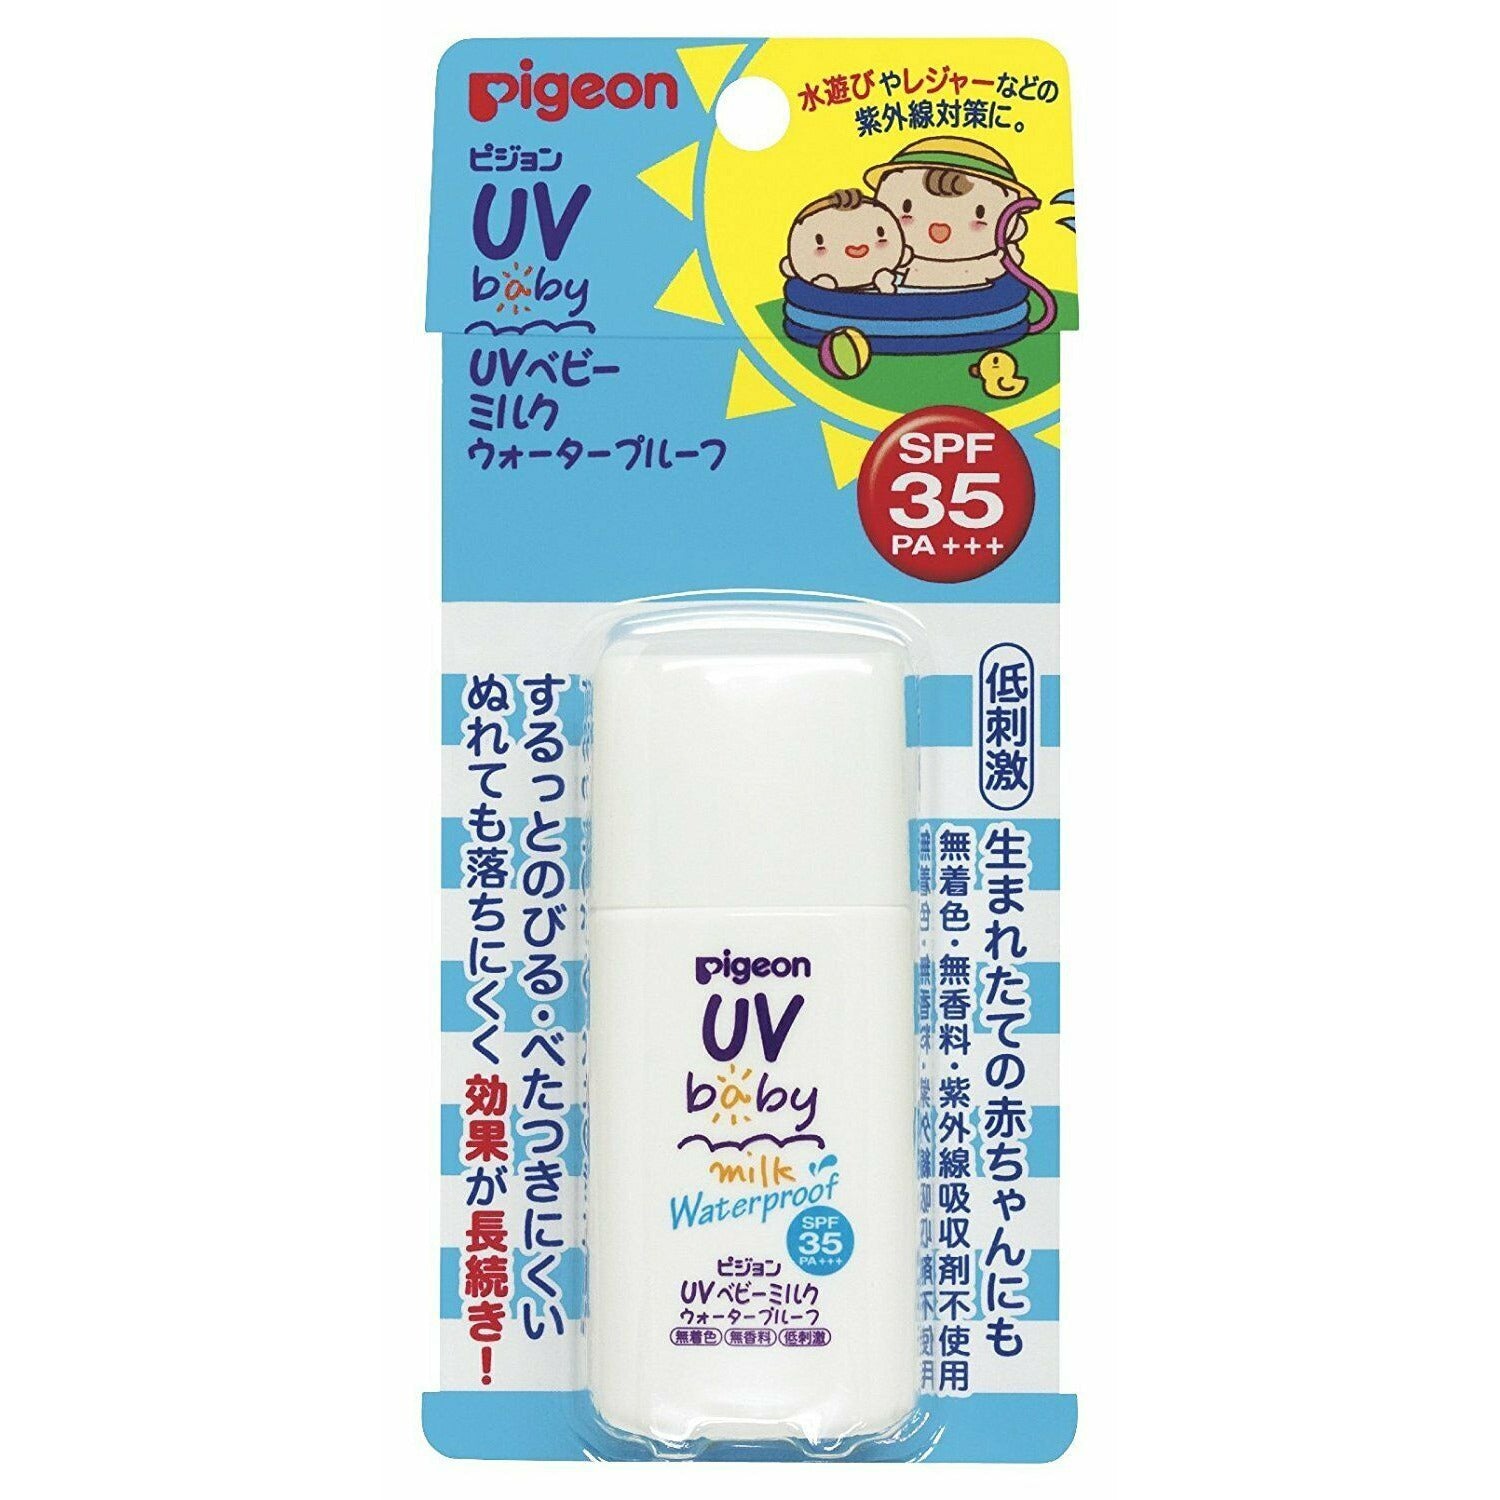 Pigeon UV Baby Milk Waterproof Sunscreen SPF35+ PA++++ 30g 